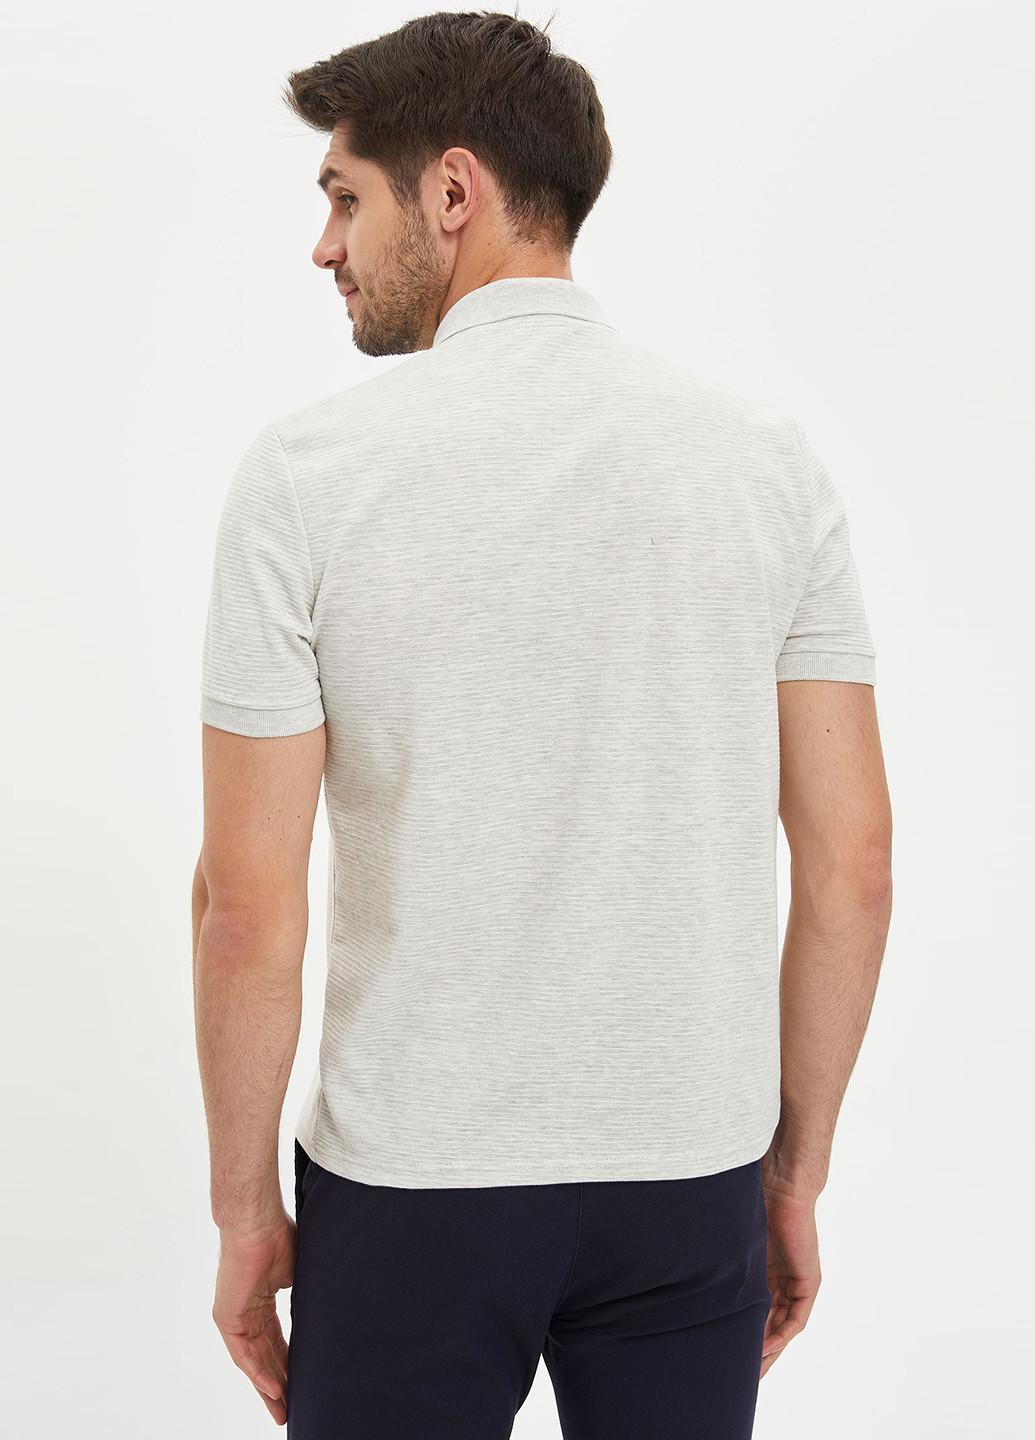 Светло-бежевая футболка-поло для мужчин DeFacto